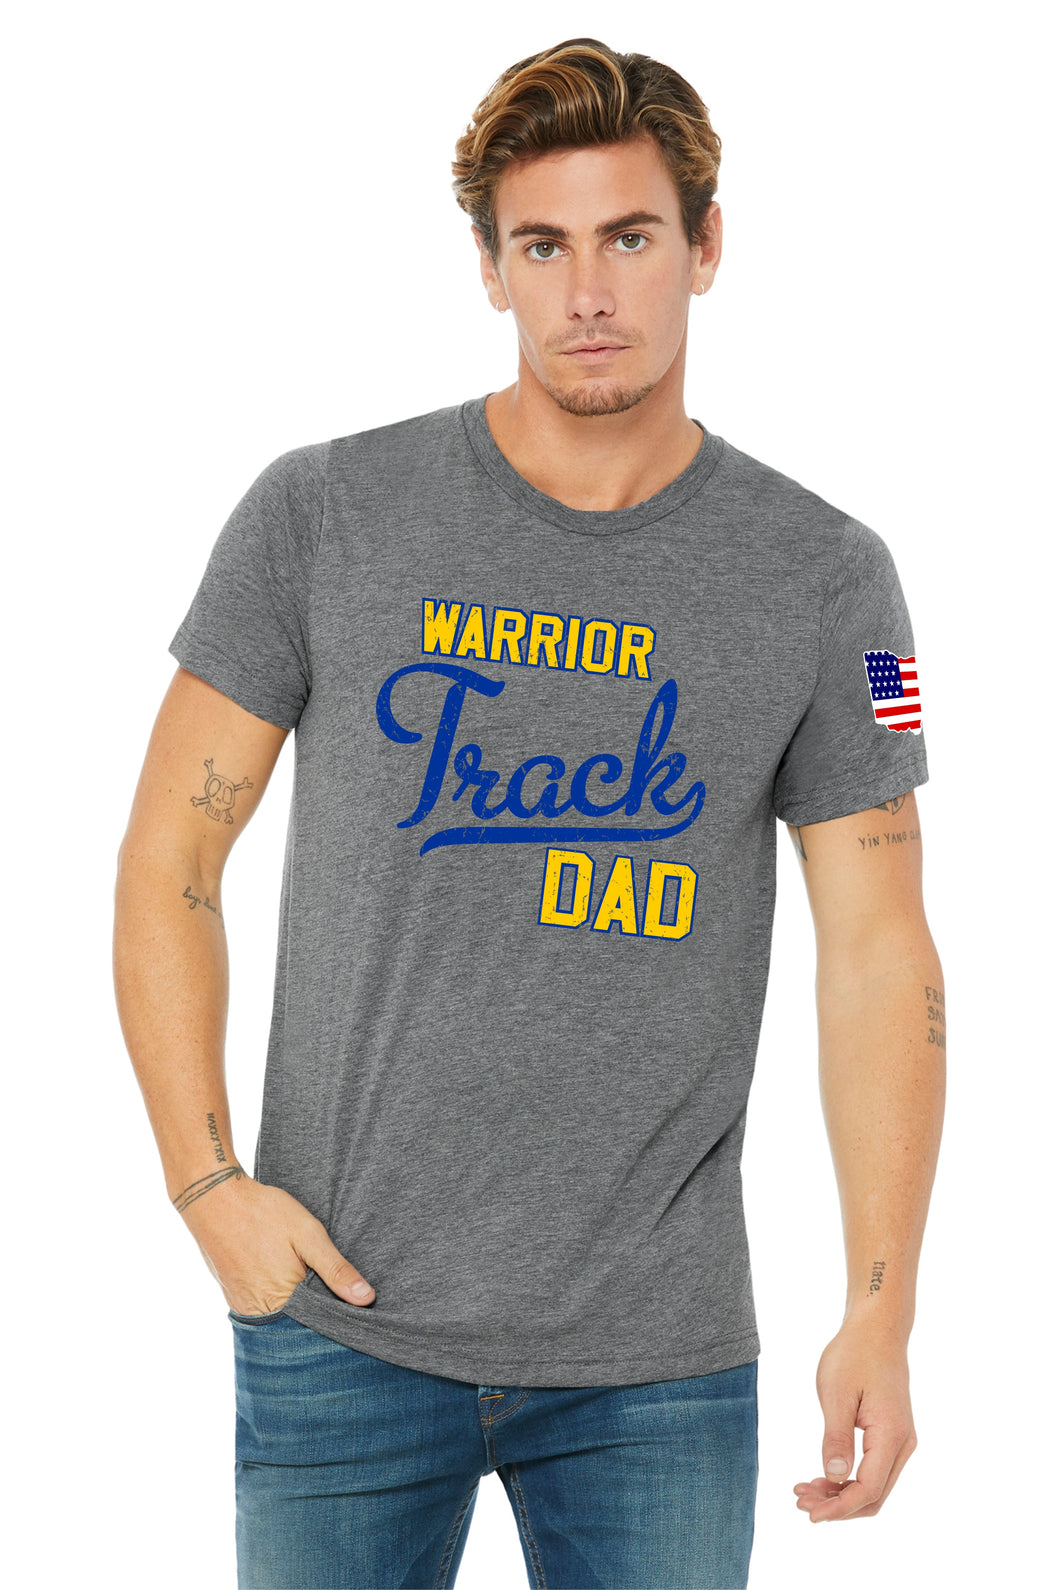 Track Dad